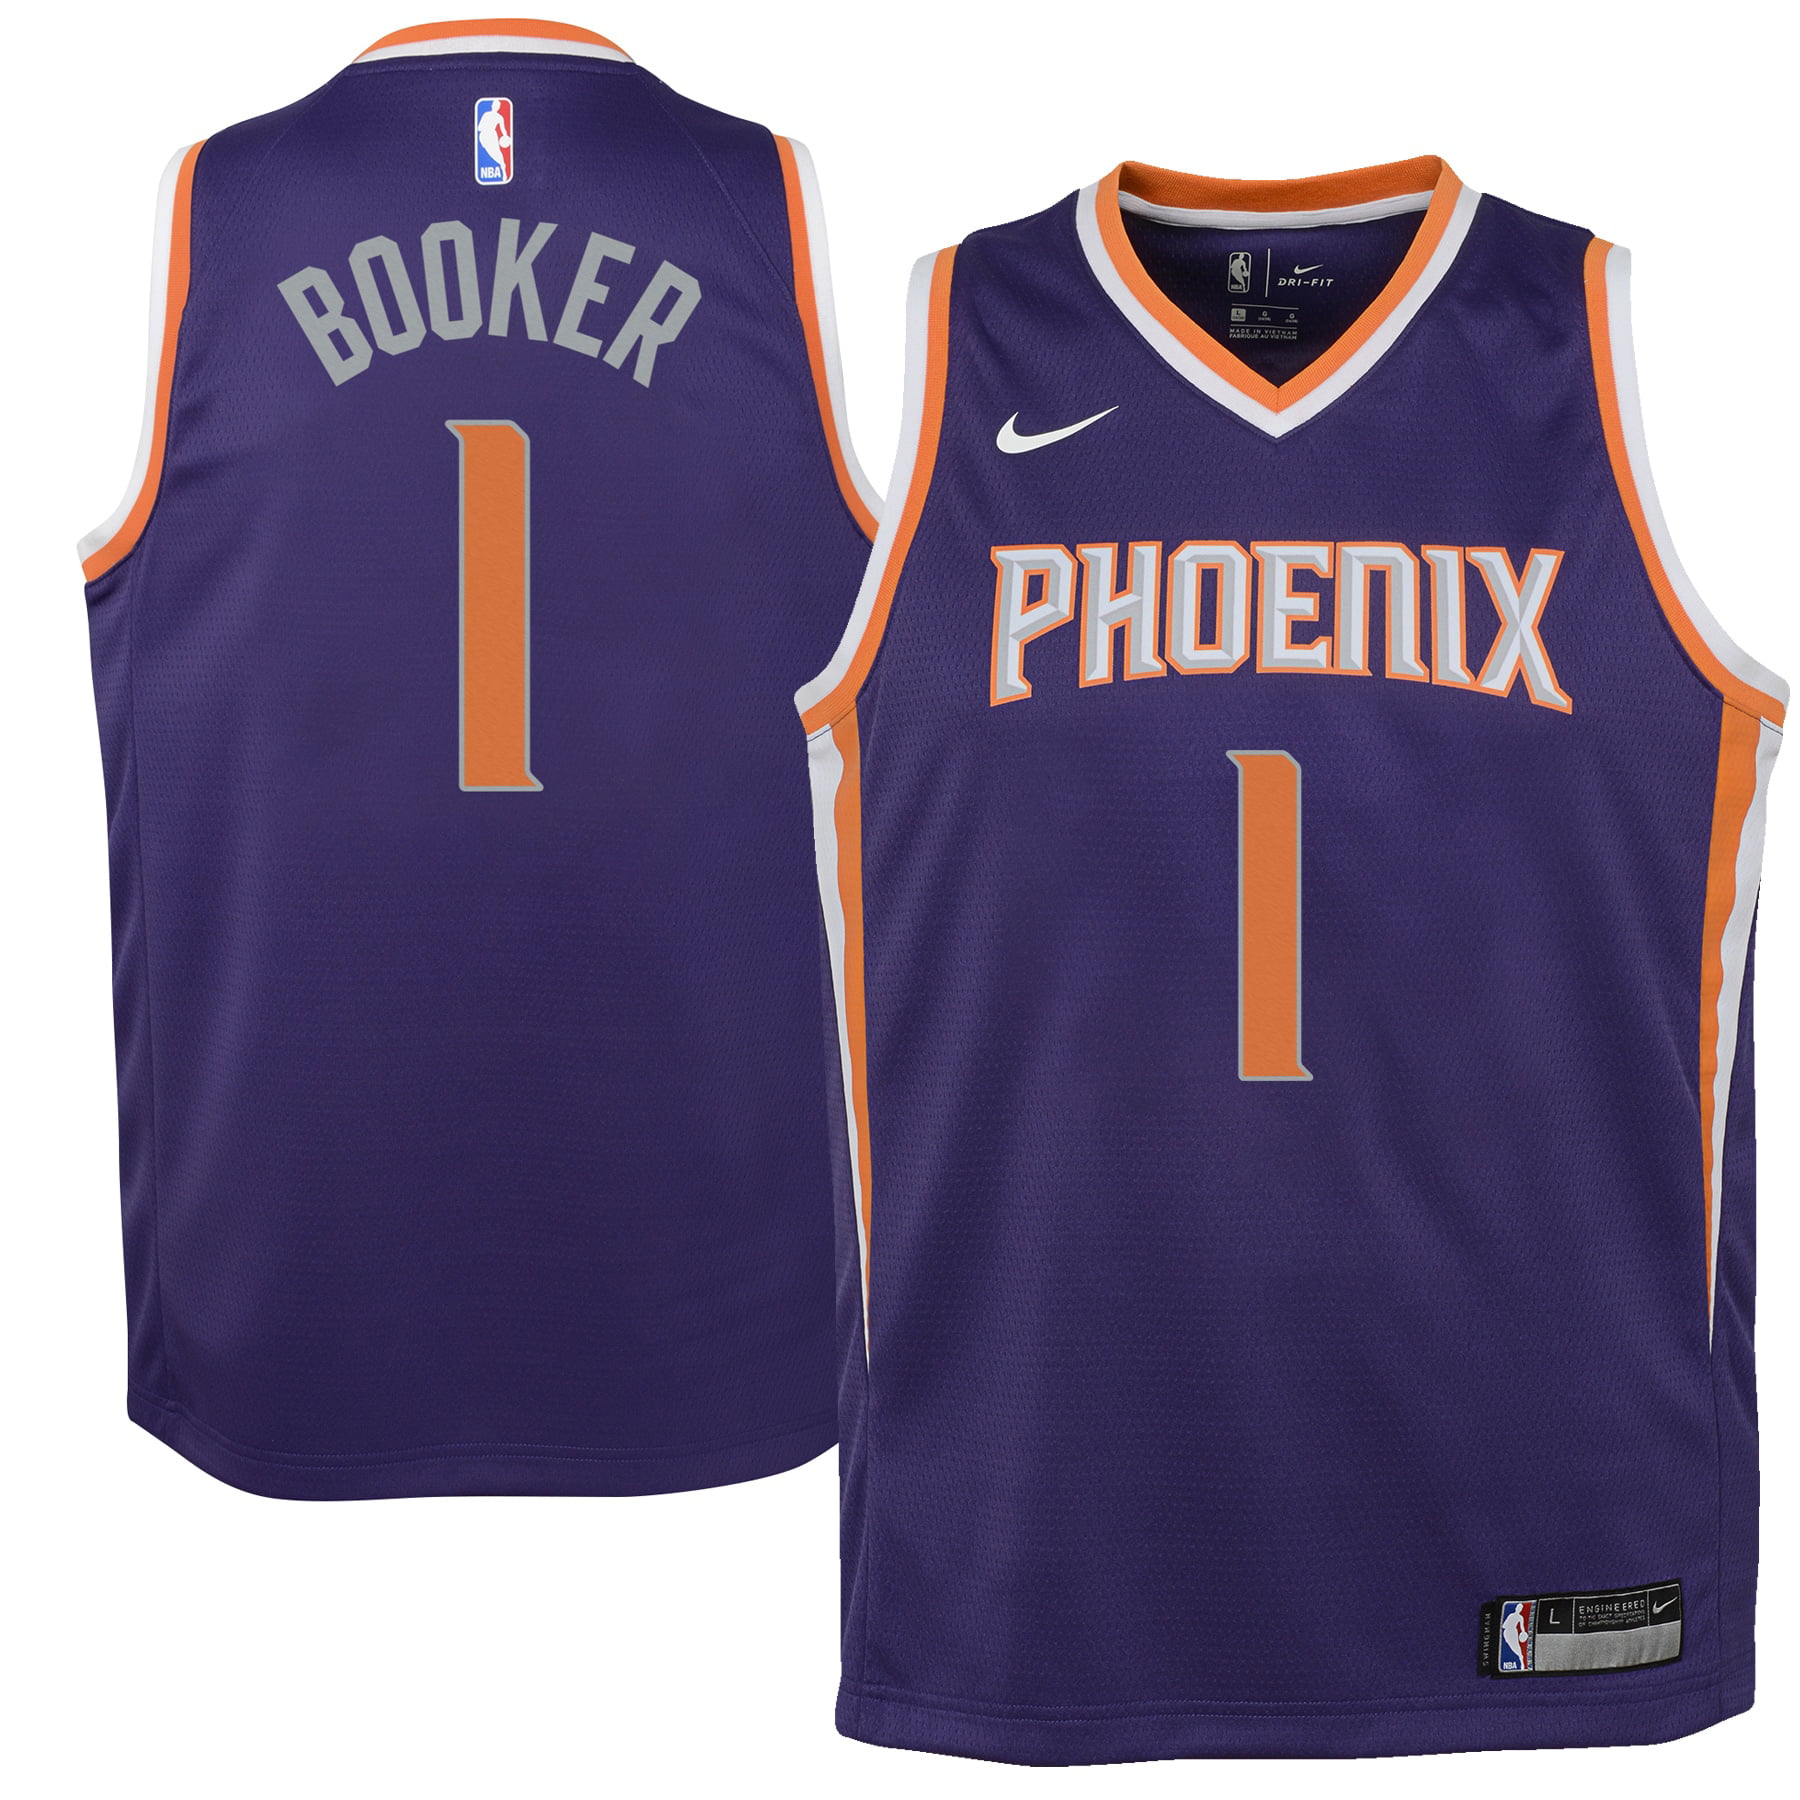 Phoenix Suns Nike Youth Swingman Jersey 